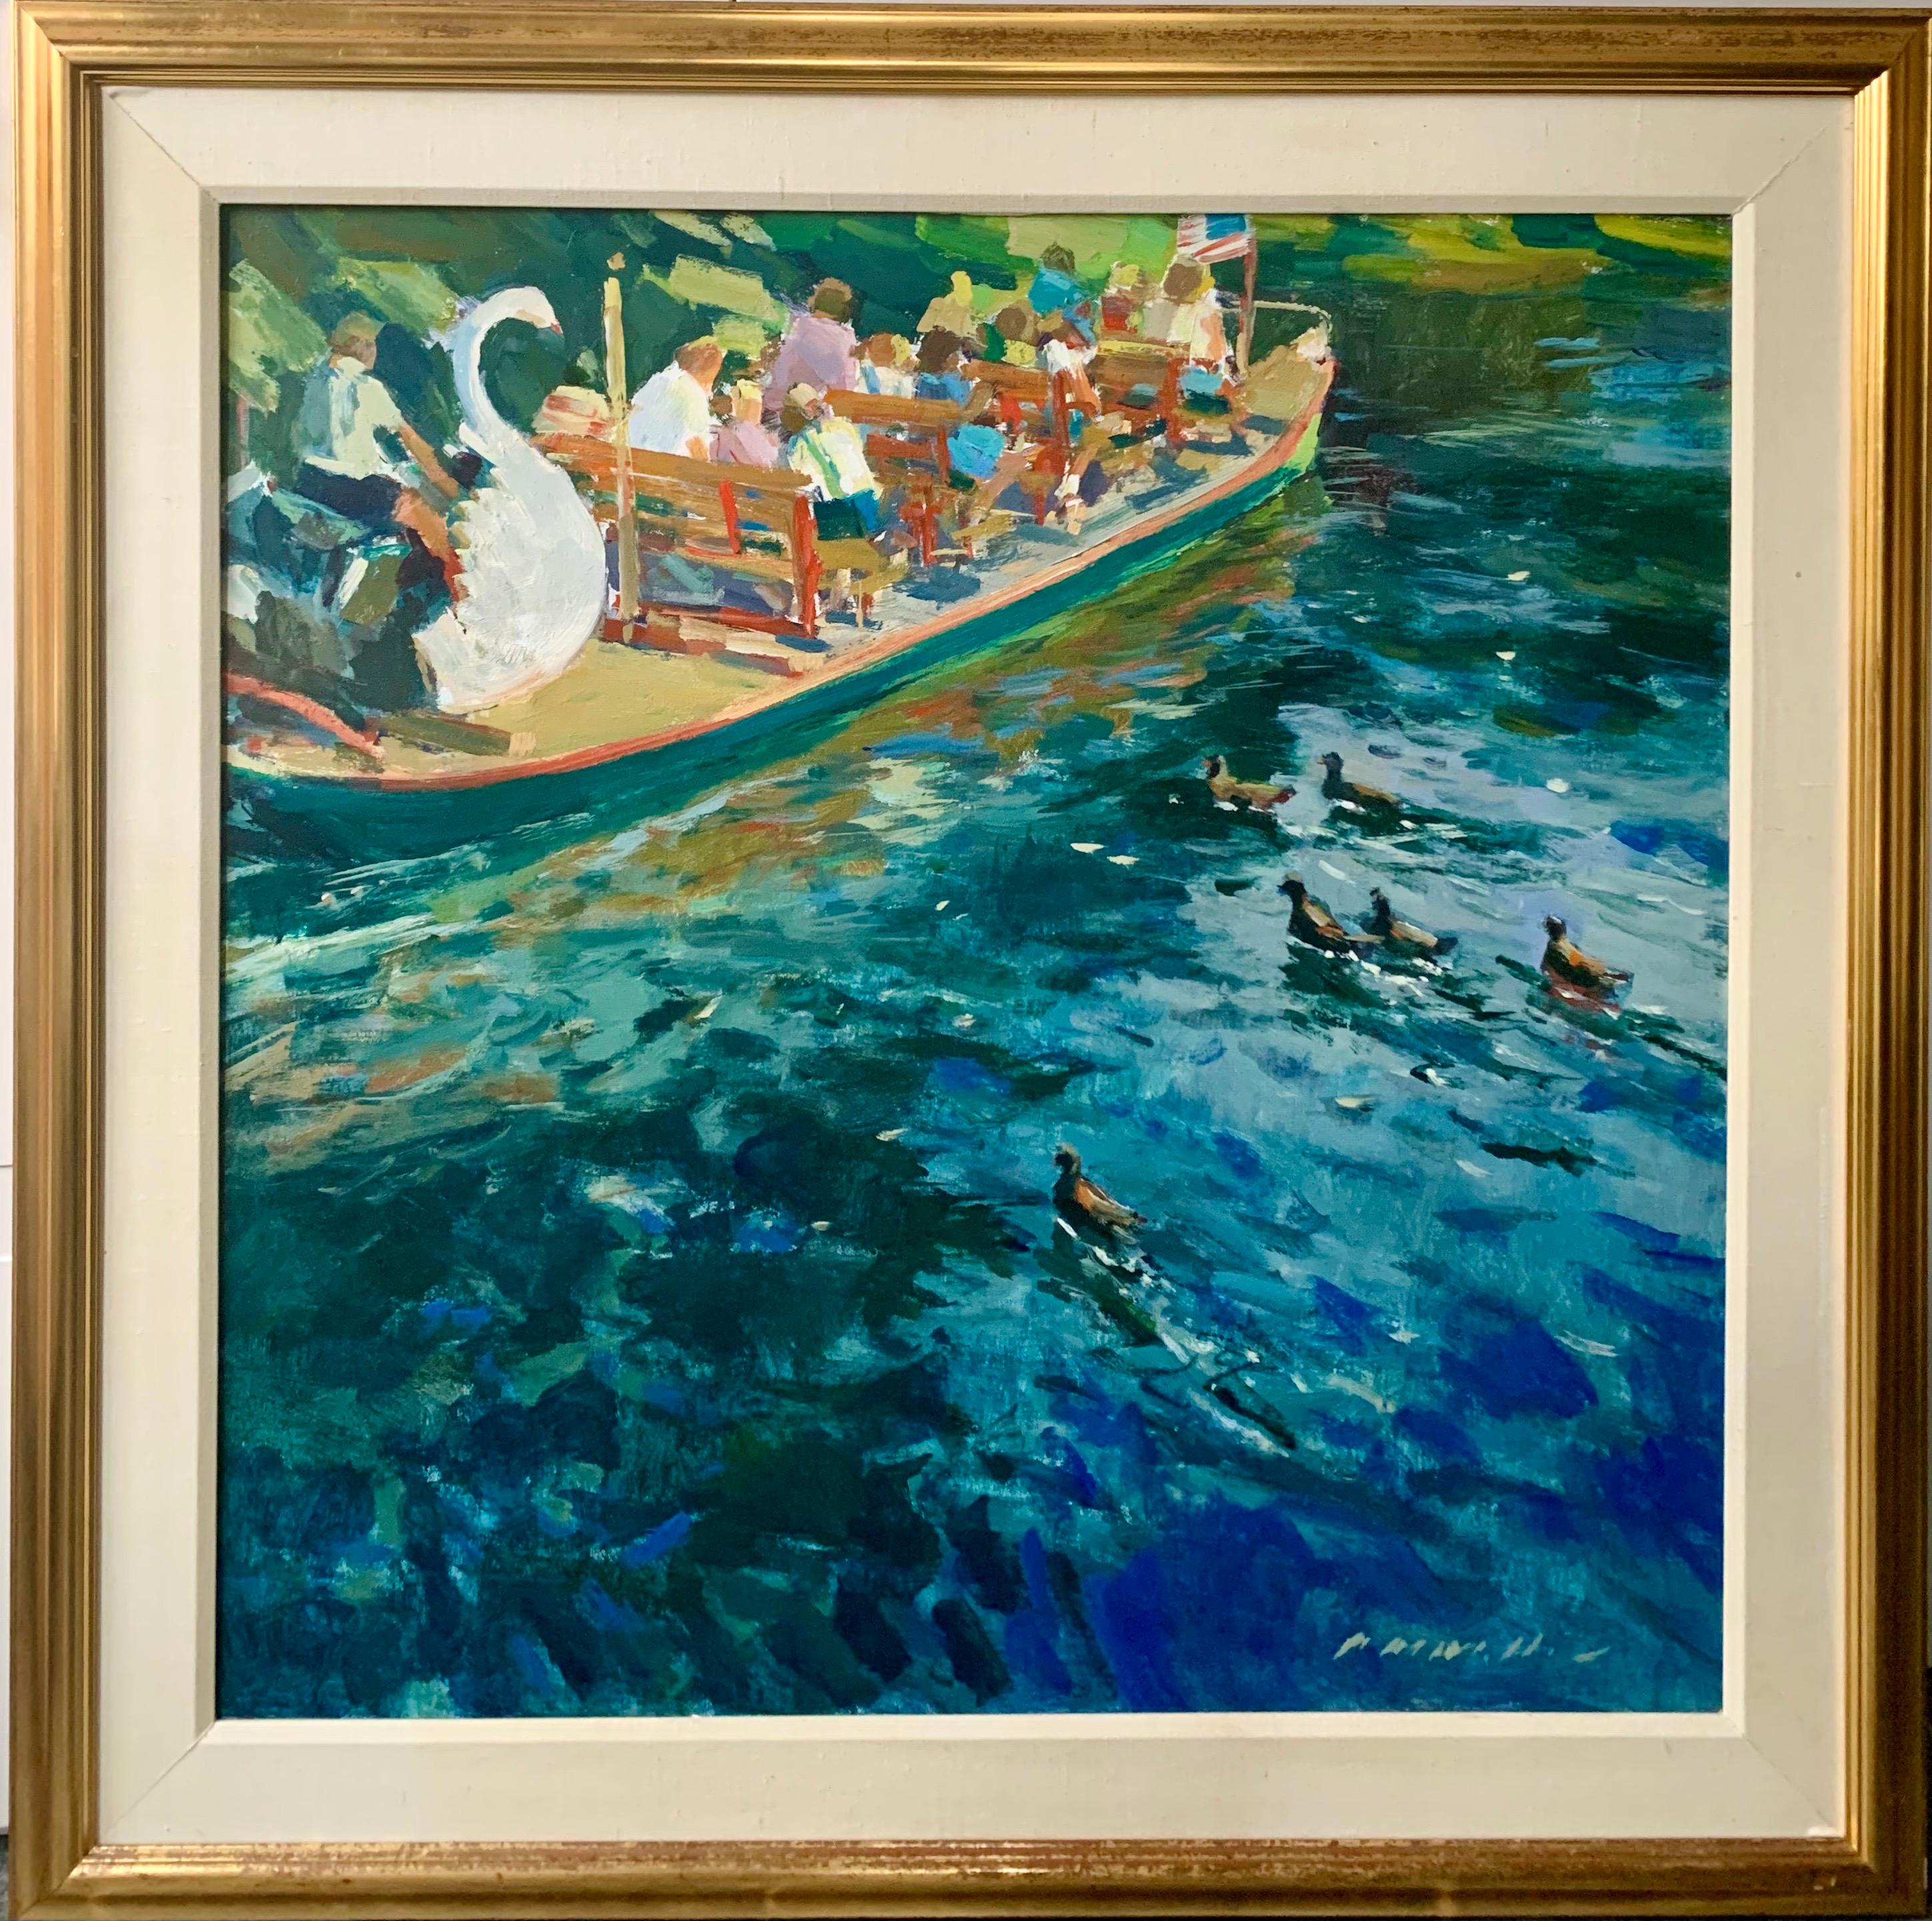 Charles Movalli Landscape Painting - Swan Boat in the Boston Public Garden - American Art Colourful Figurative Genre